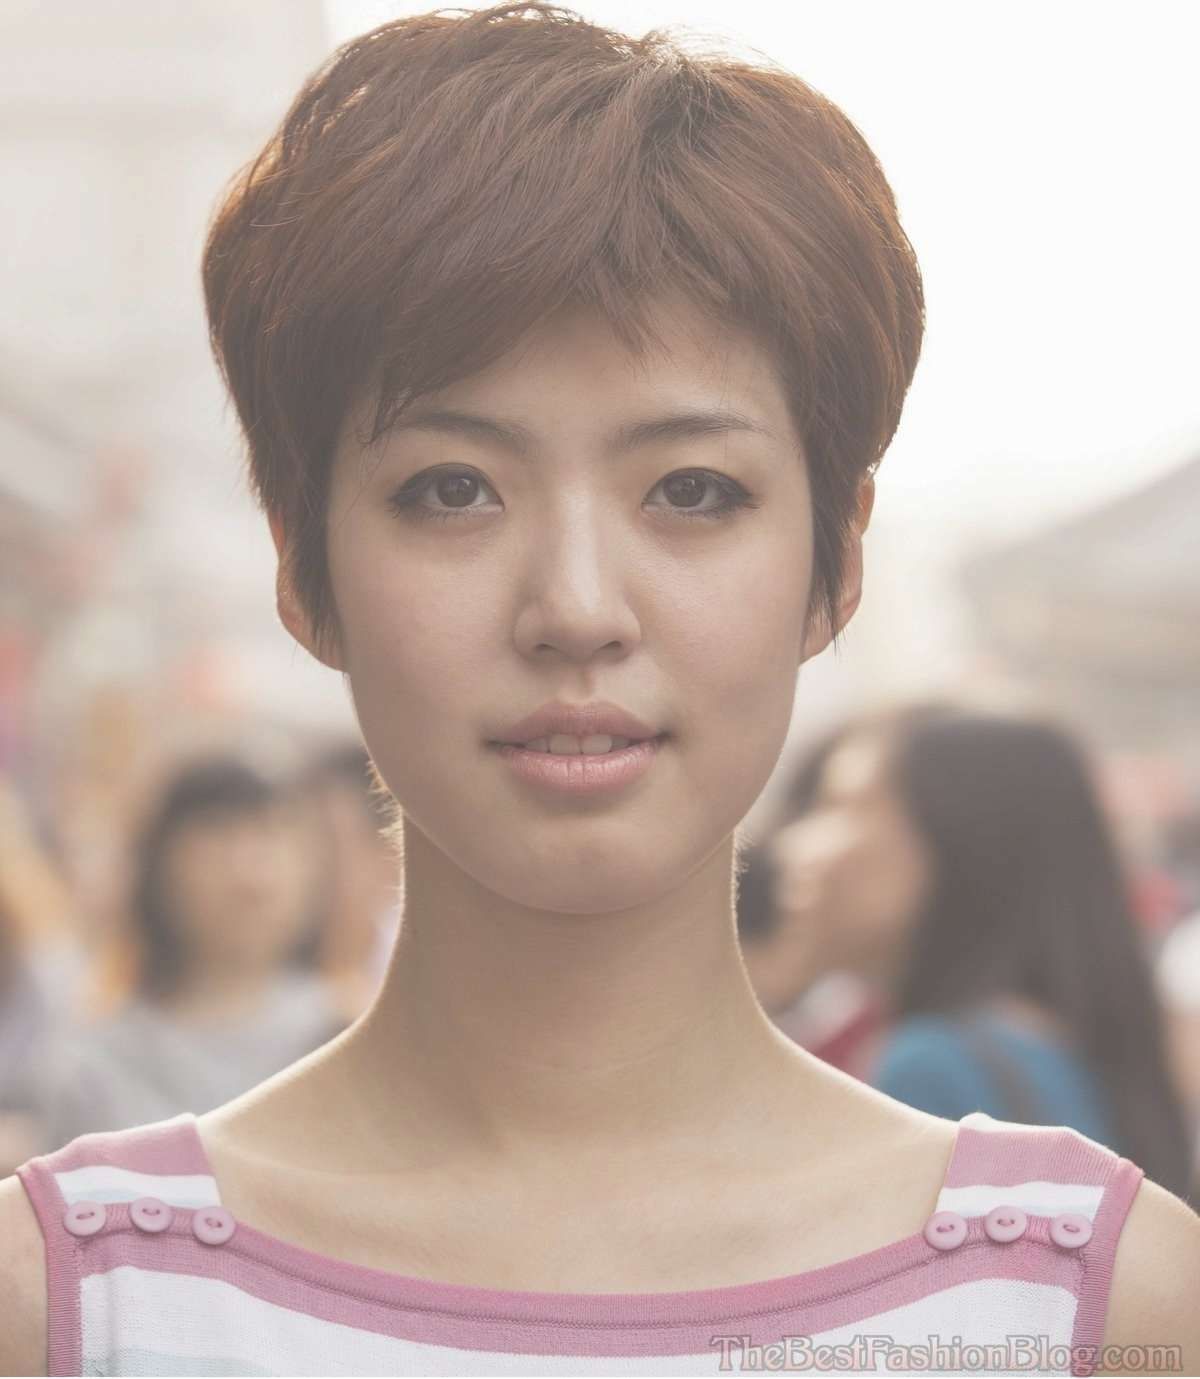 Best Asian Pixie Haircut Asian Women Hairstyles Pertaining To Most Recent Asian Pixie Hairstyles (View 3 of 15)